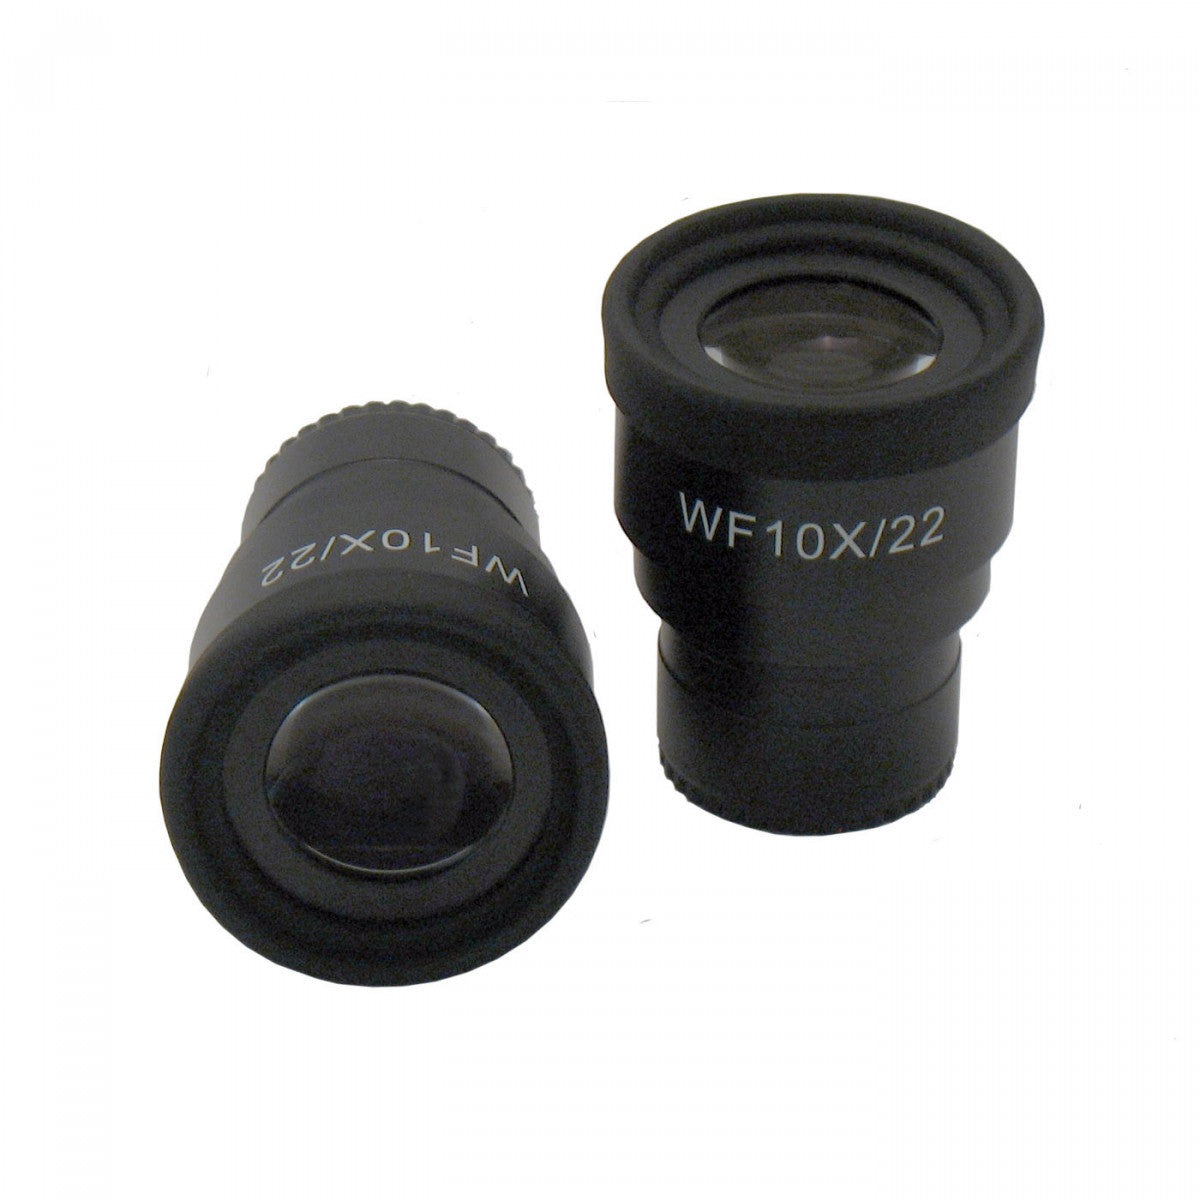 Eyepieces for Accu-Scope 3012 Microscope